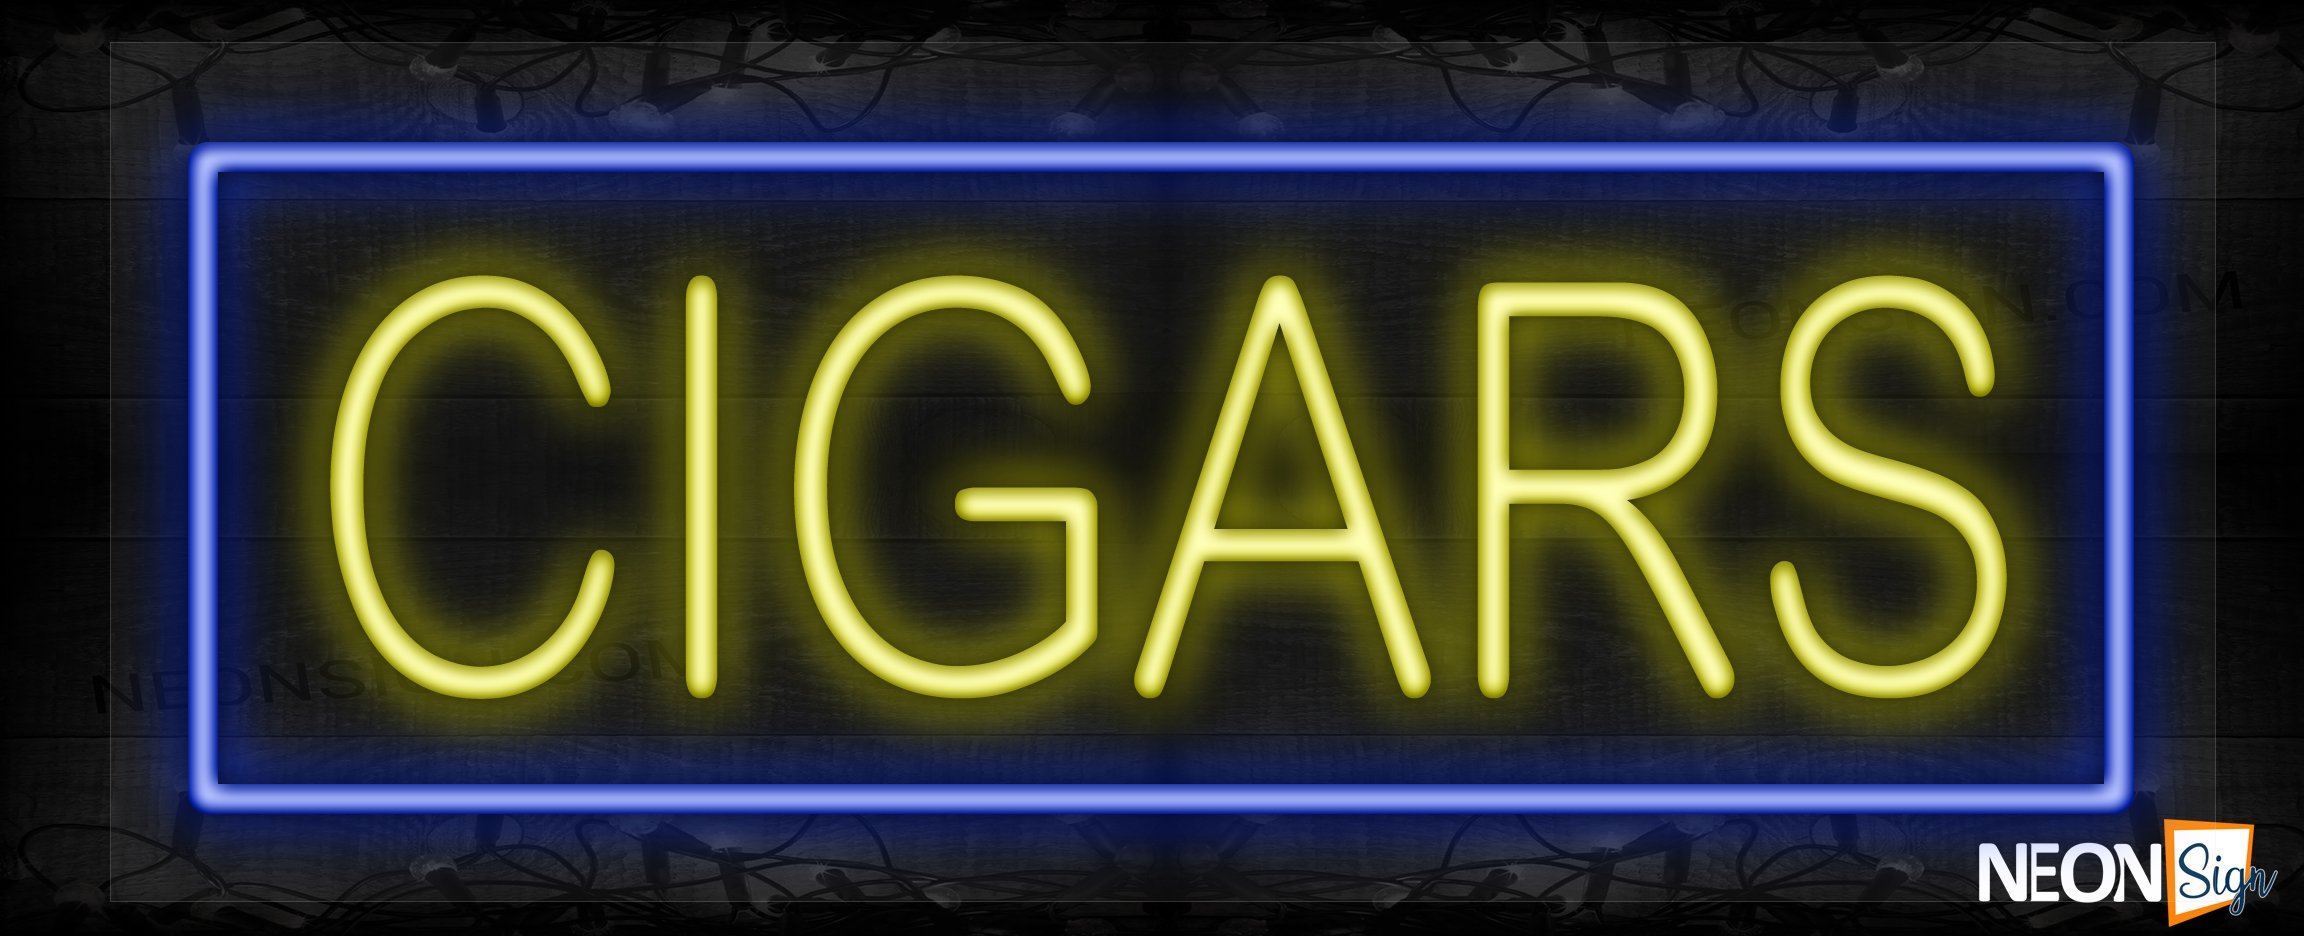 Image of Cigars with blue border LED Flex